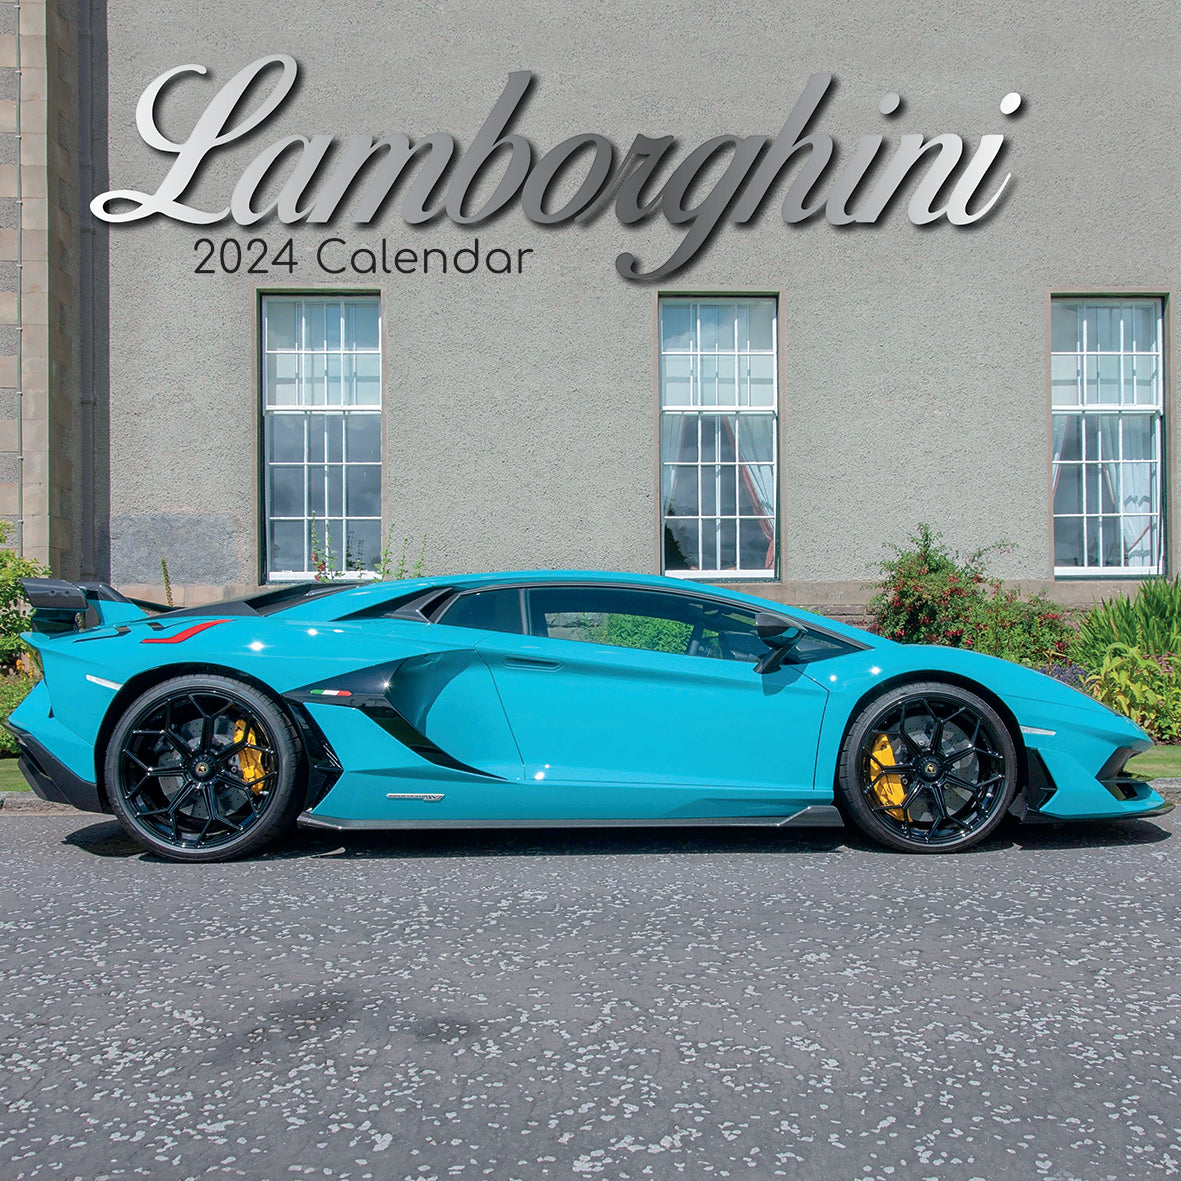 2024 Lamborghini - Square Wall Calendar